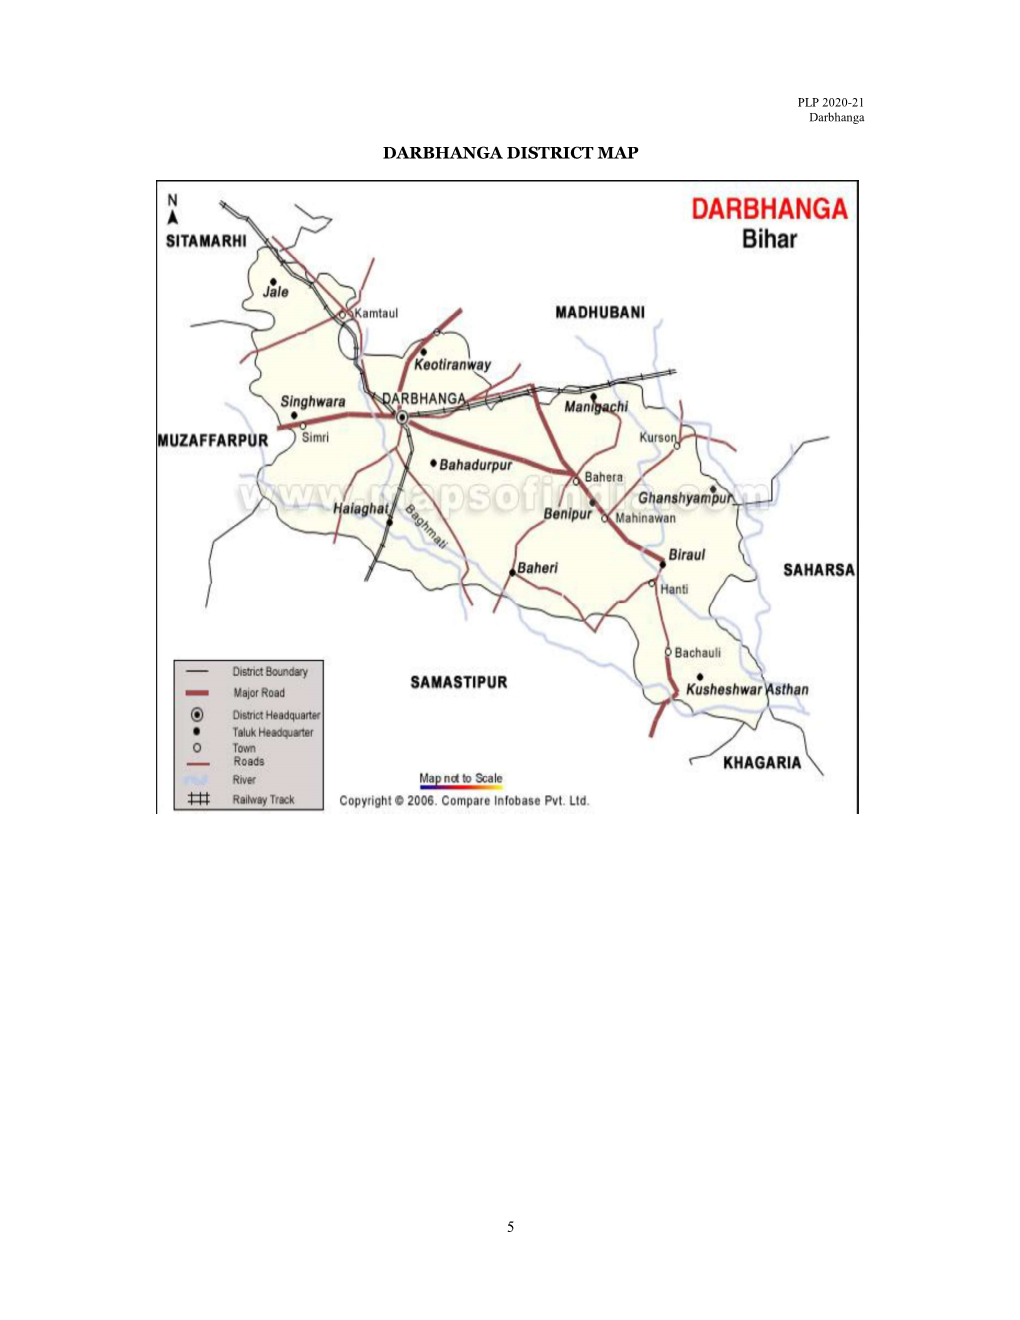 5 Darbhanga District